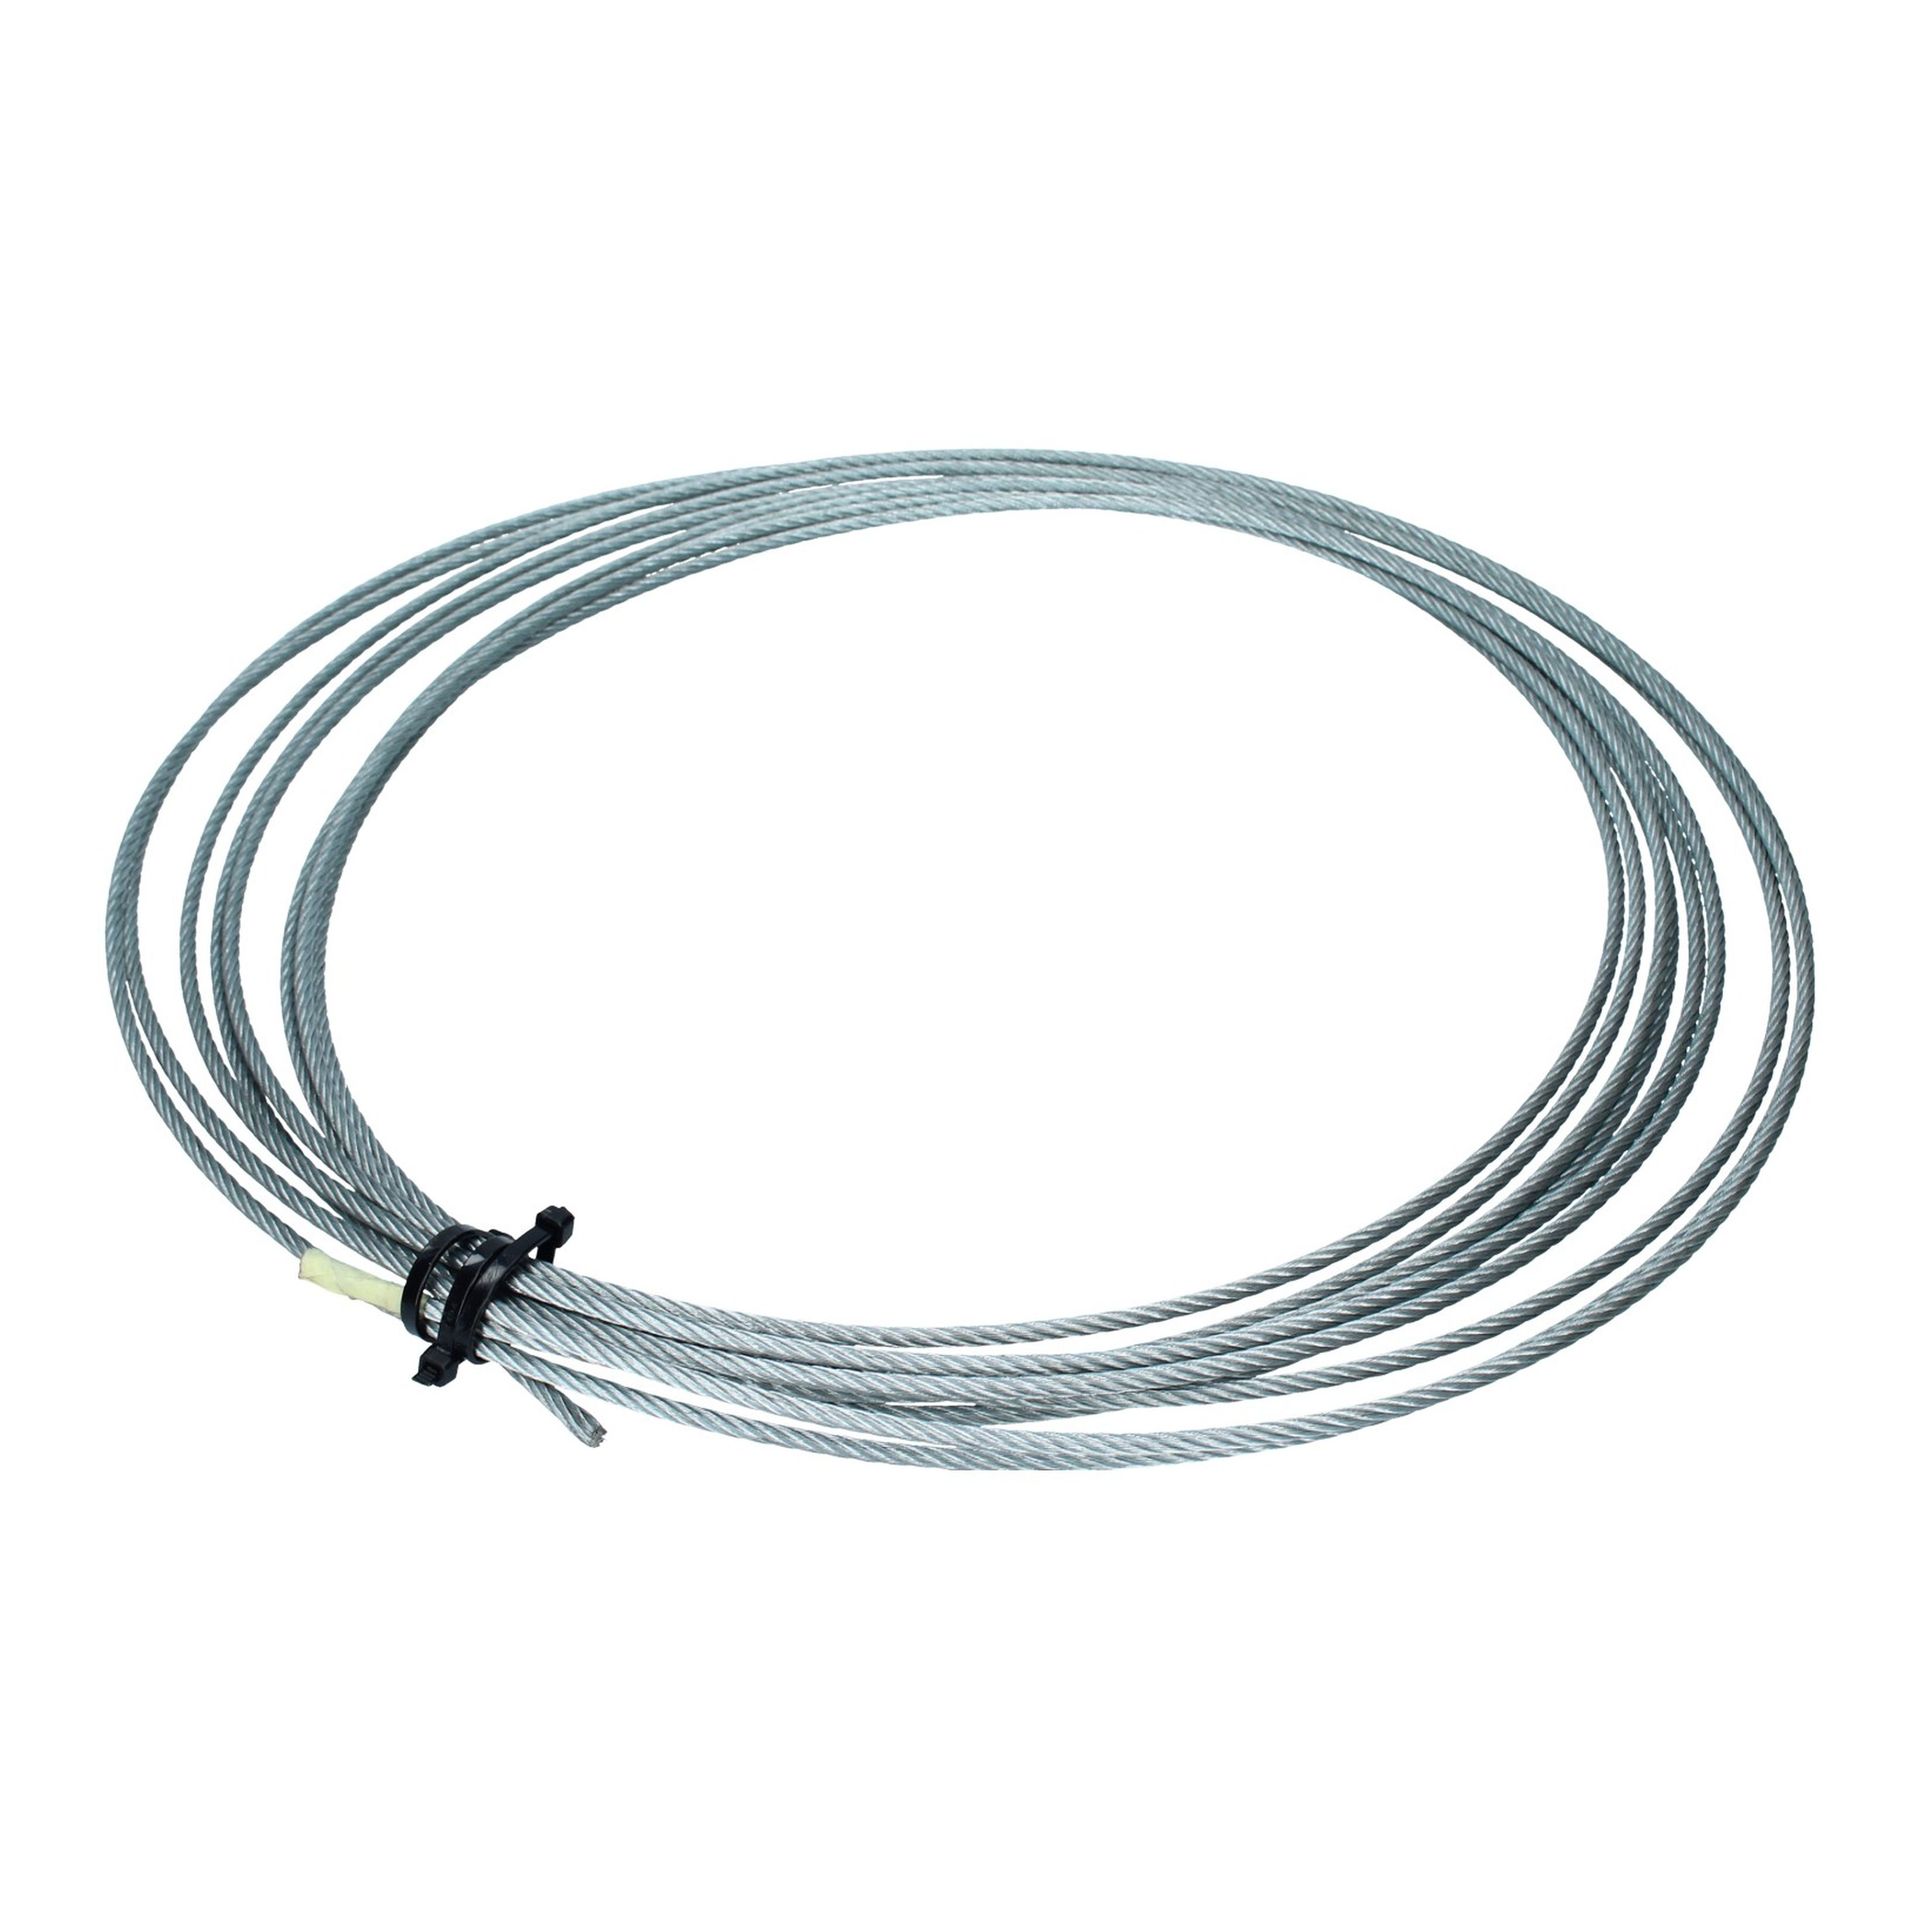 Rear Droop Stop Cable (Per M)